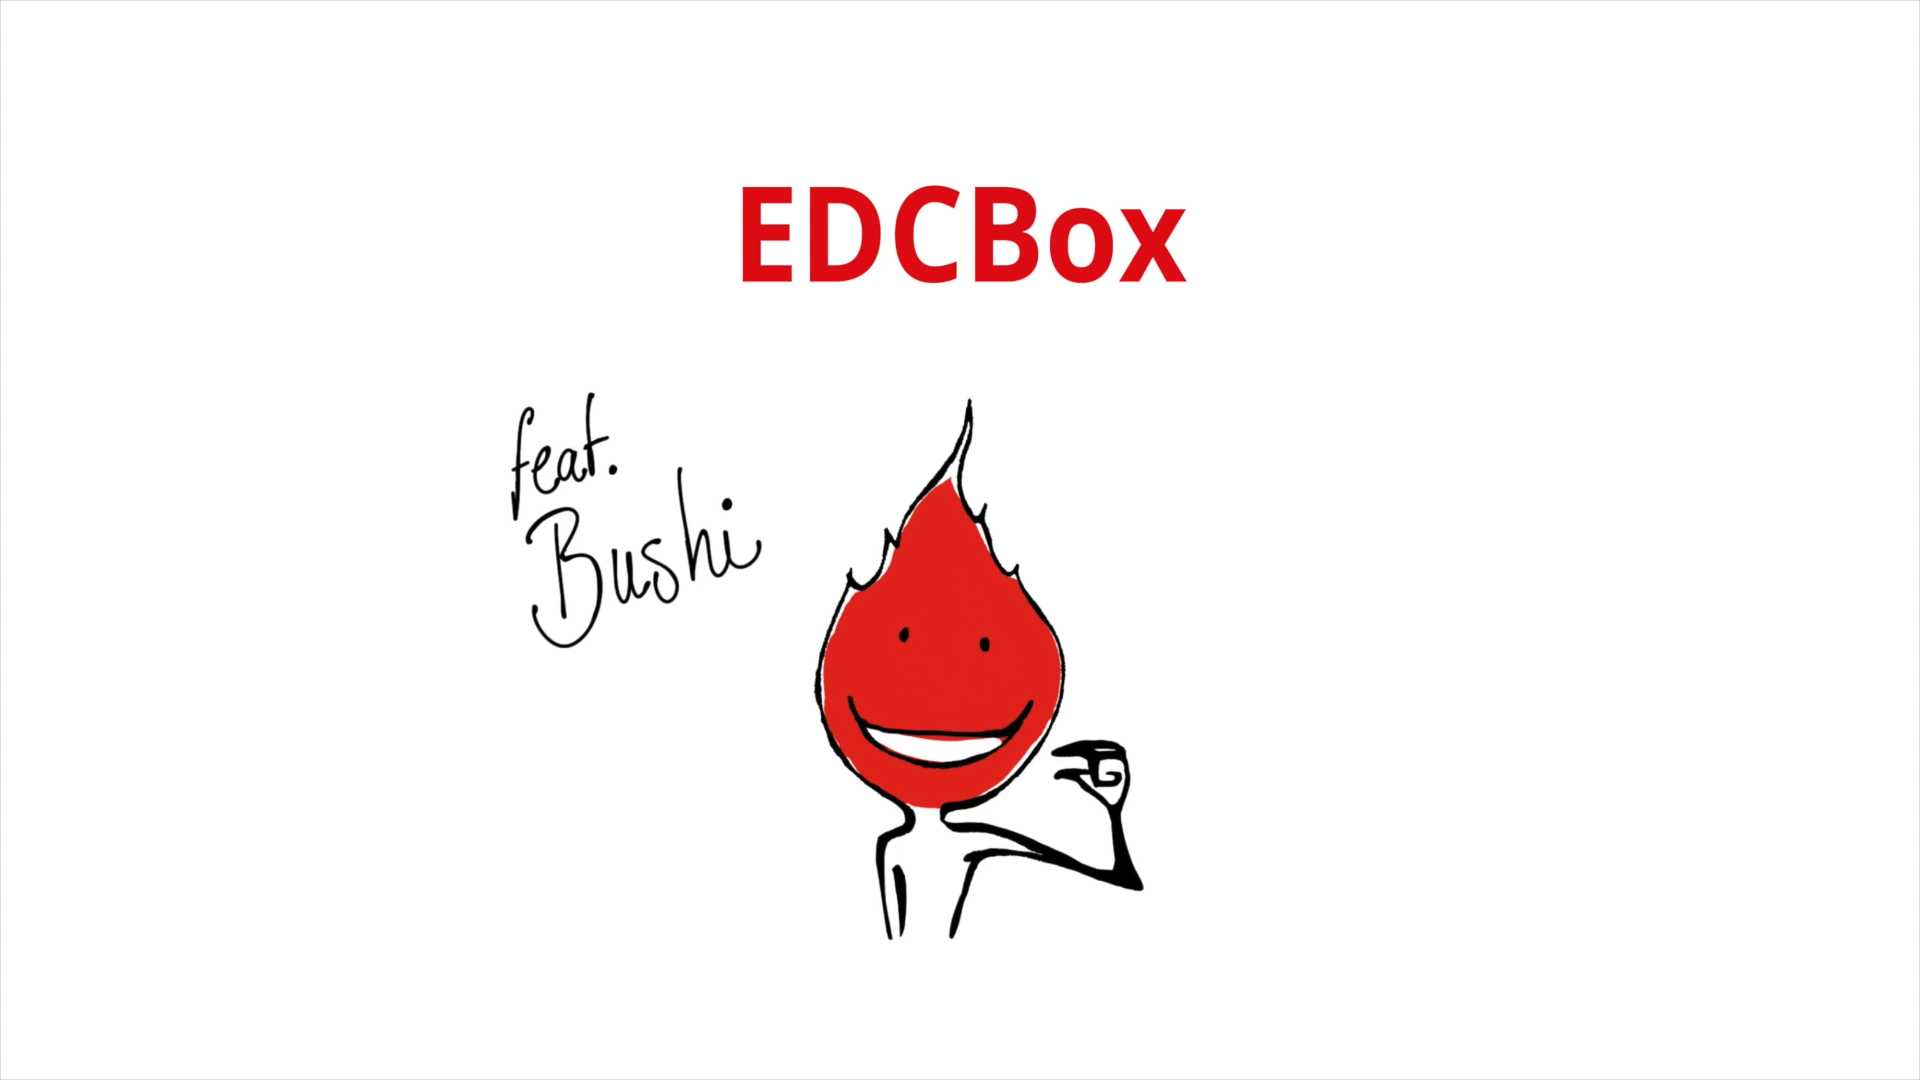 Bushi's EDCBox Tips & Tricks